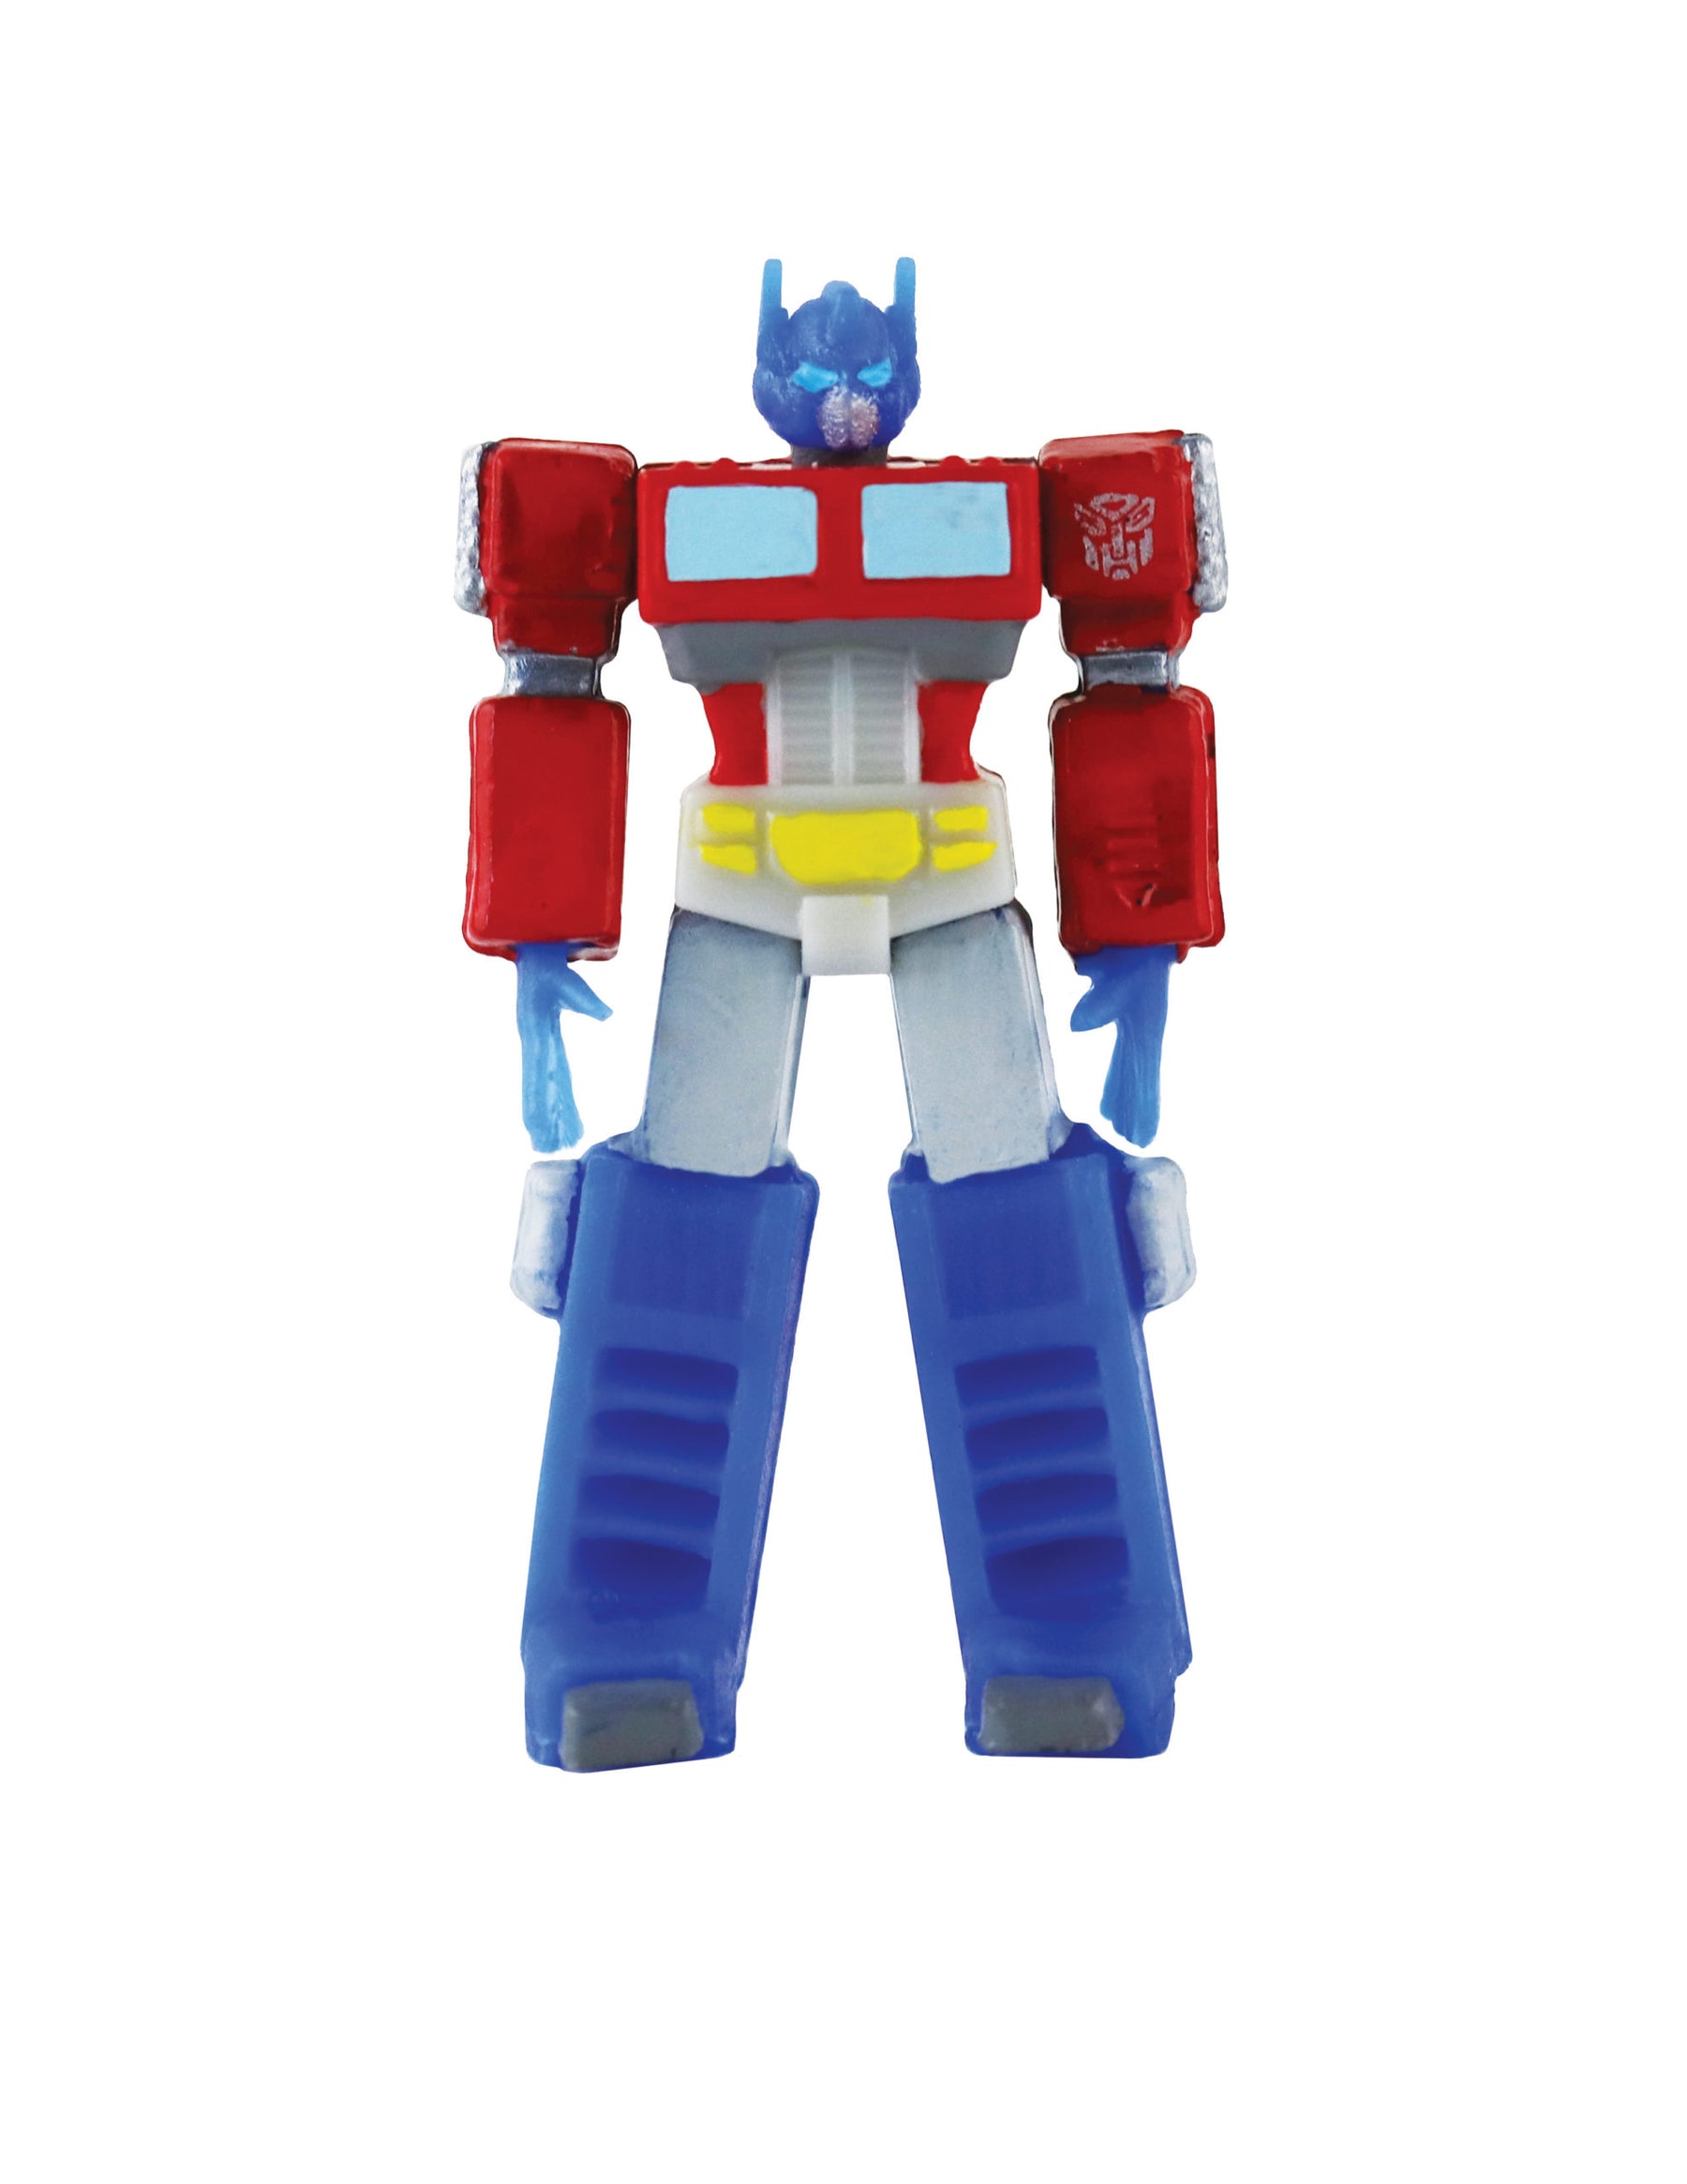 World's Smallest Transformers Optimus Prime Micro Action Figure - Zlc Collectibles